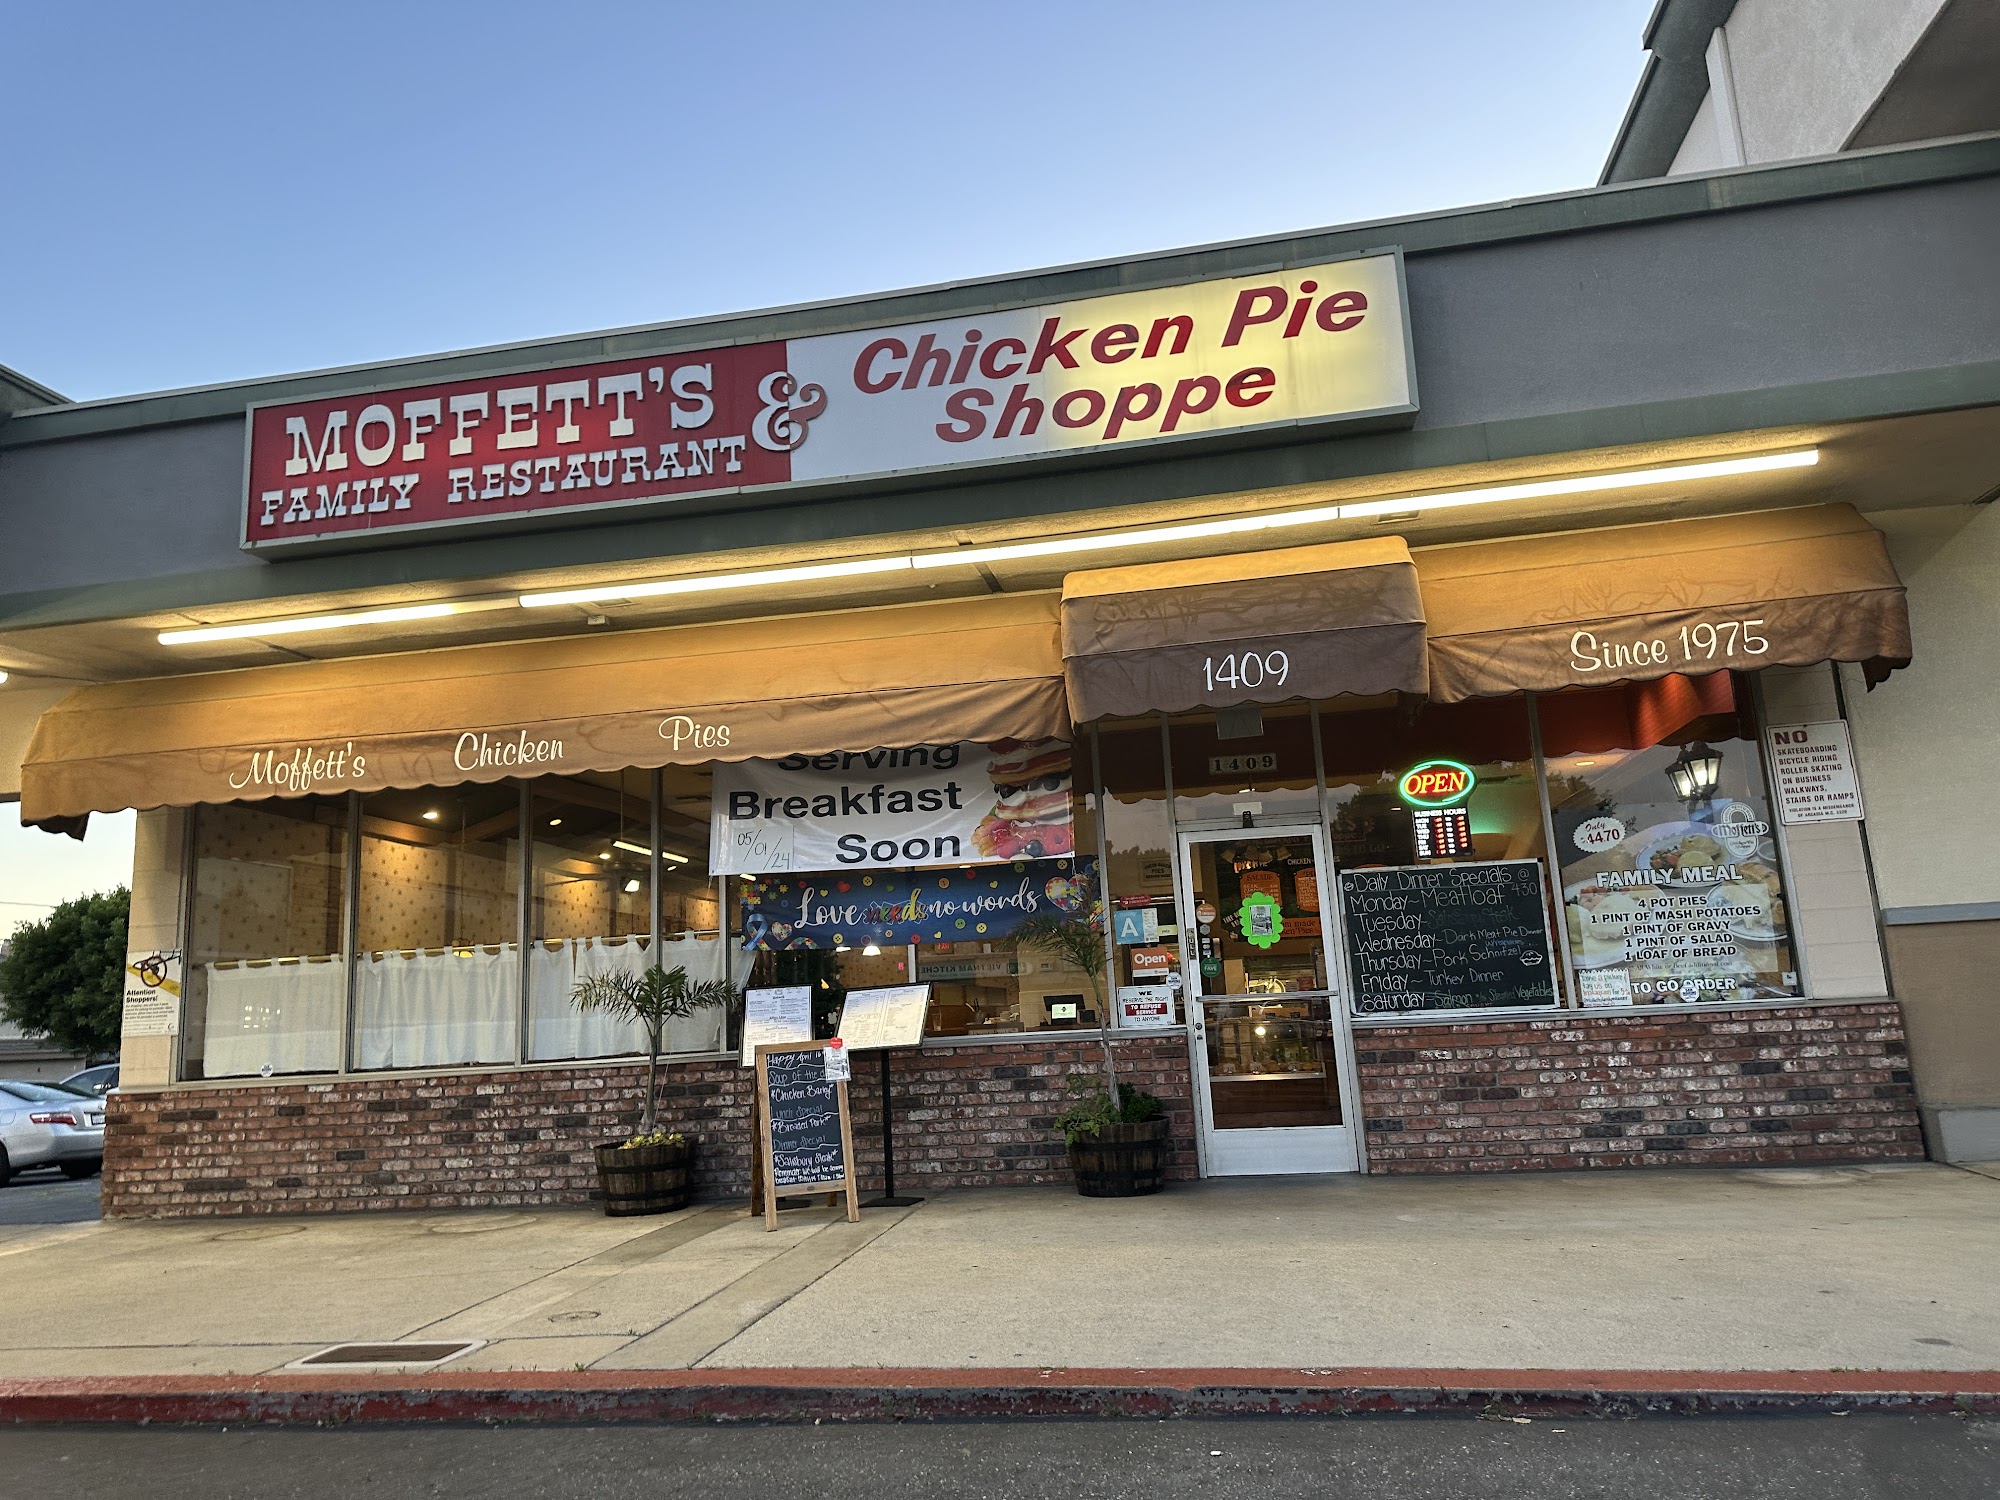 Moffett's Family Restaurant & Chicken Pie Shoppe